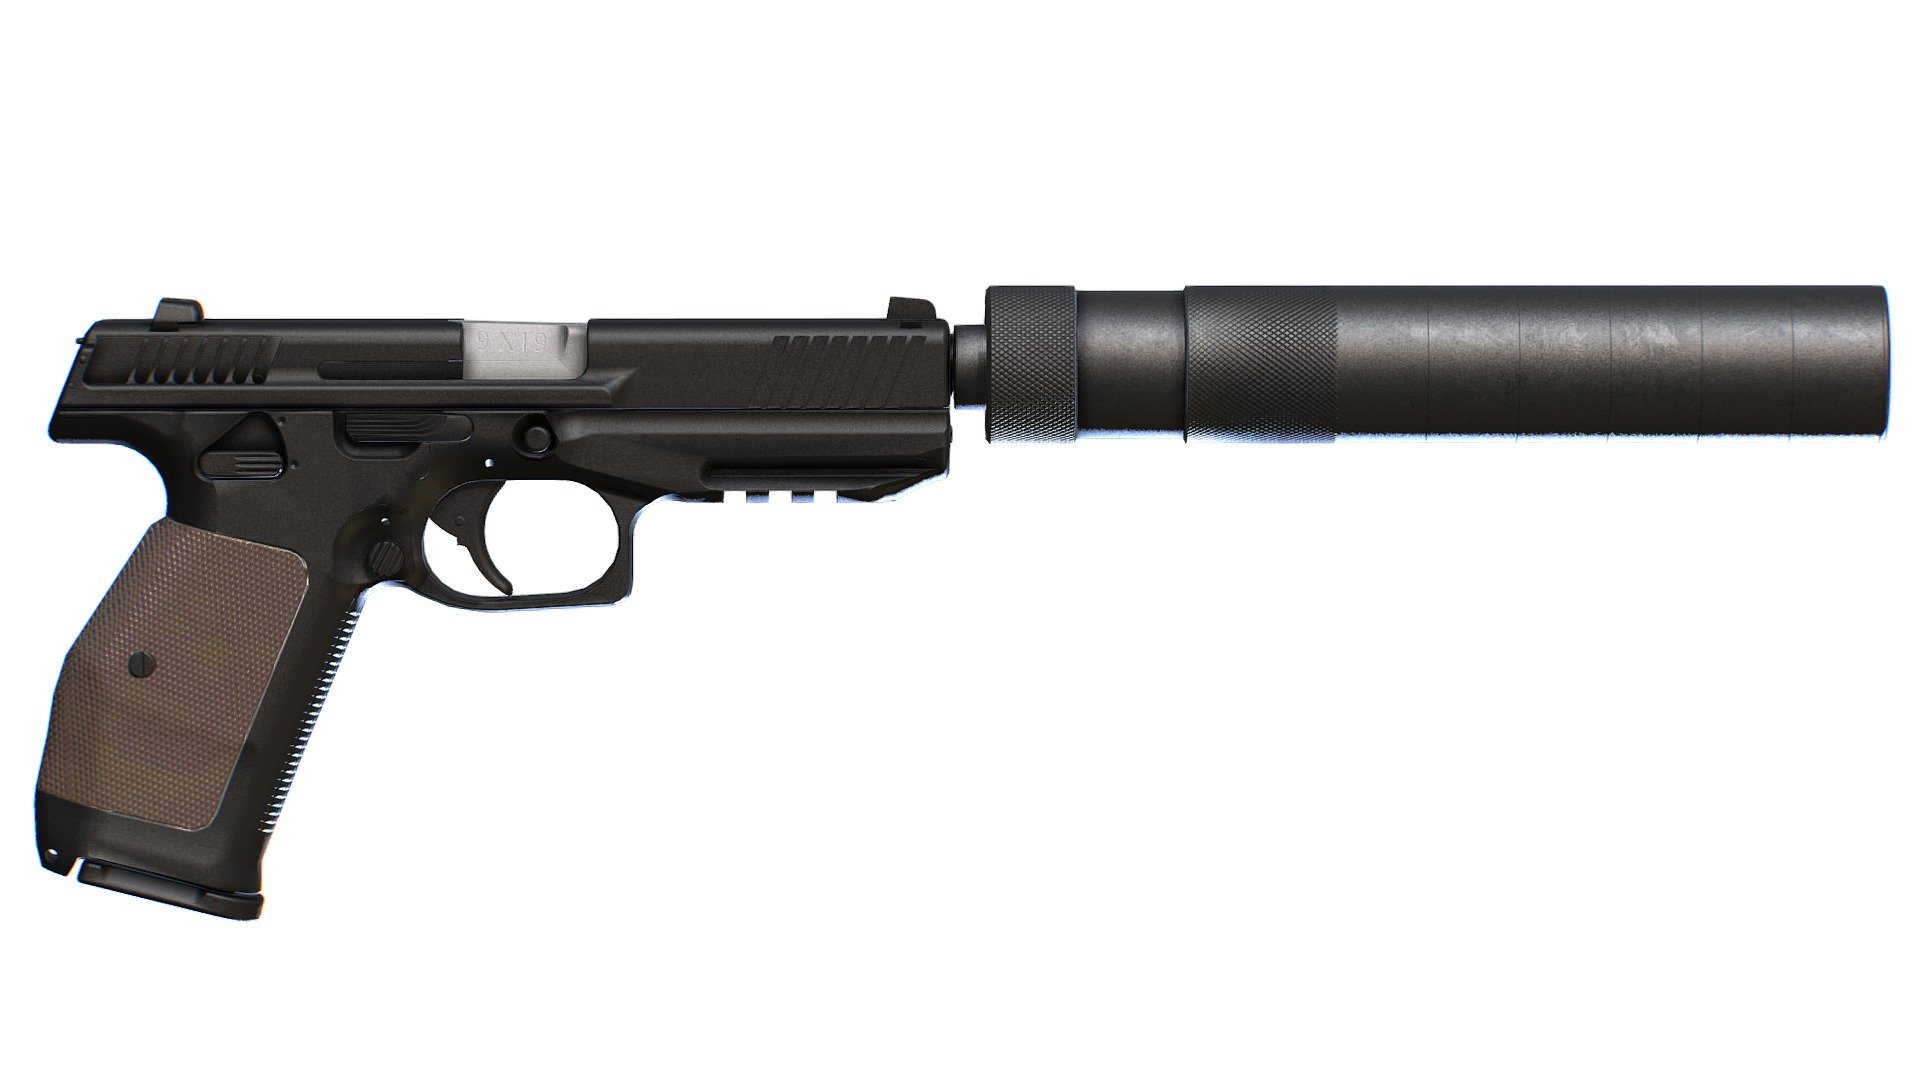 Lebedev's Semi automatic Black Pistol PL15 LowPoly model -2048x2048 textures, 3dsMaya file included 3d model